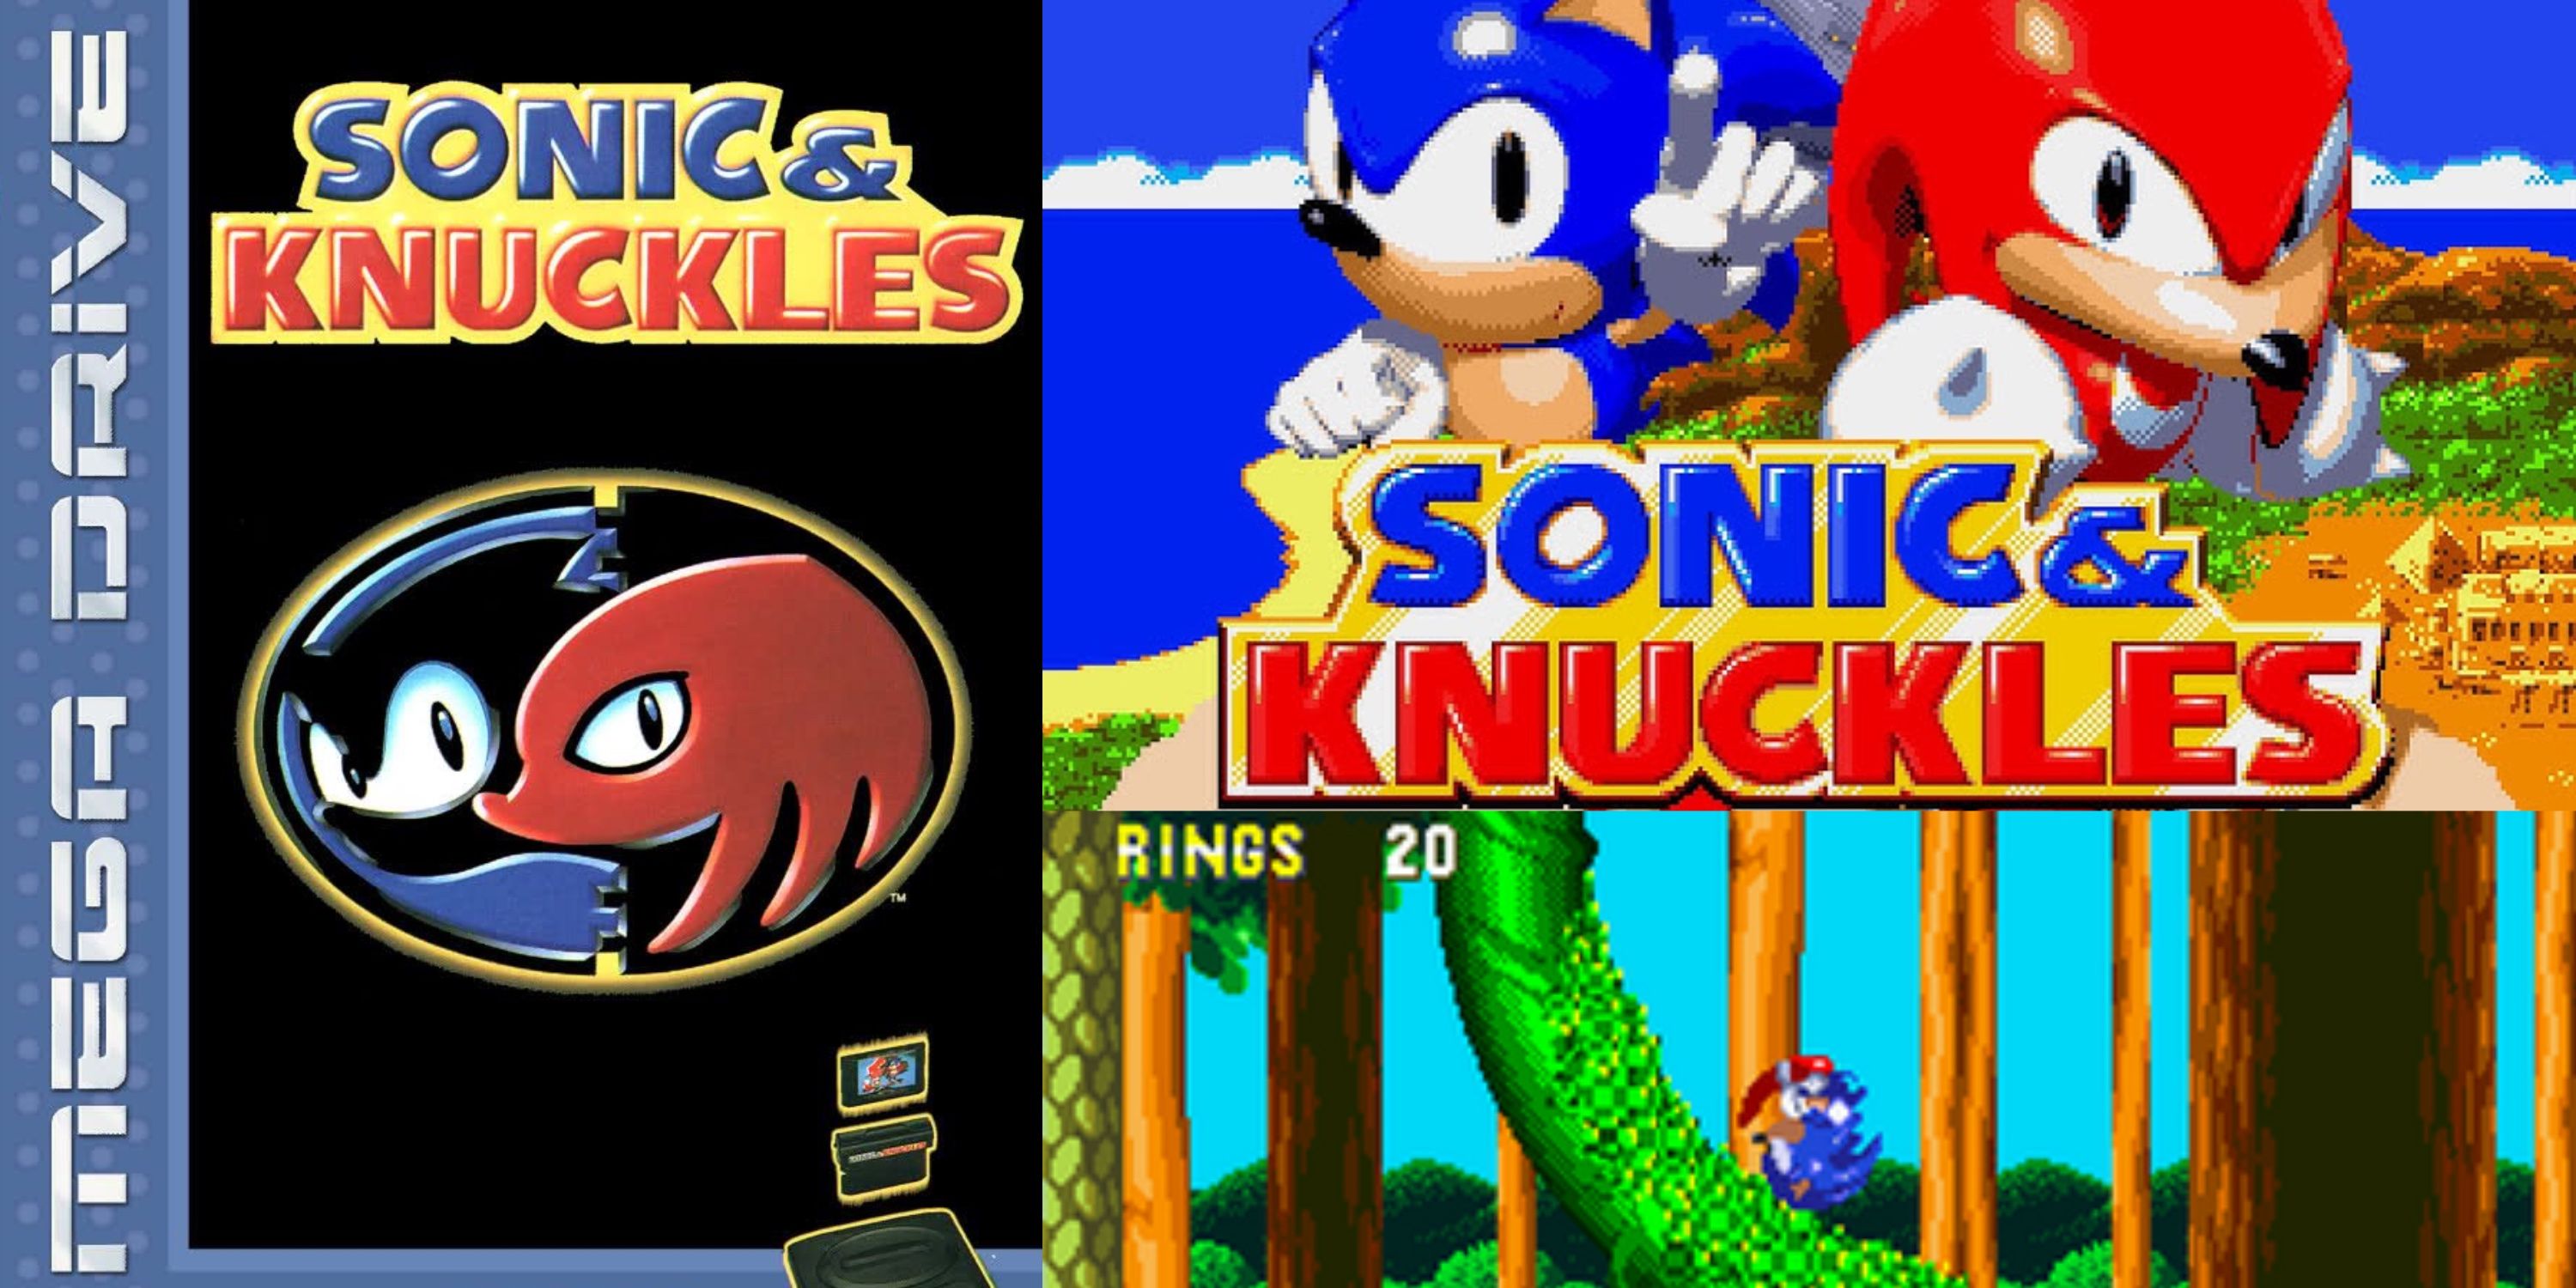 sonic and knuckles mega drive box art, screenshot, title screen